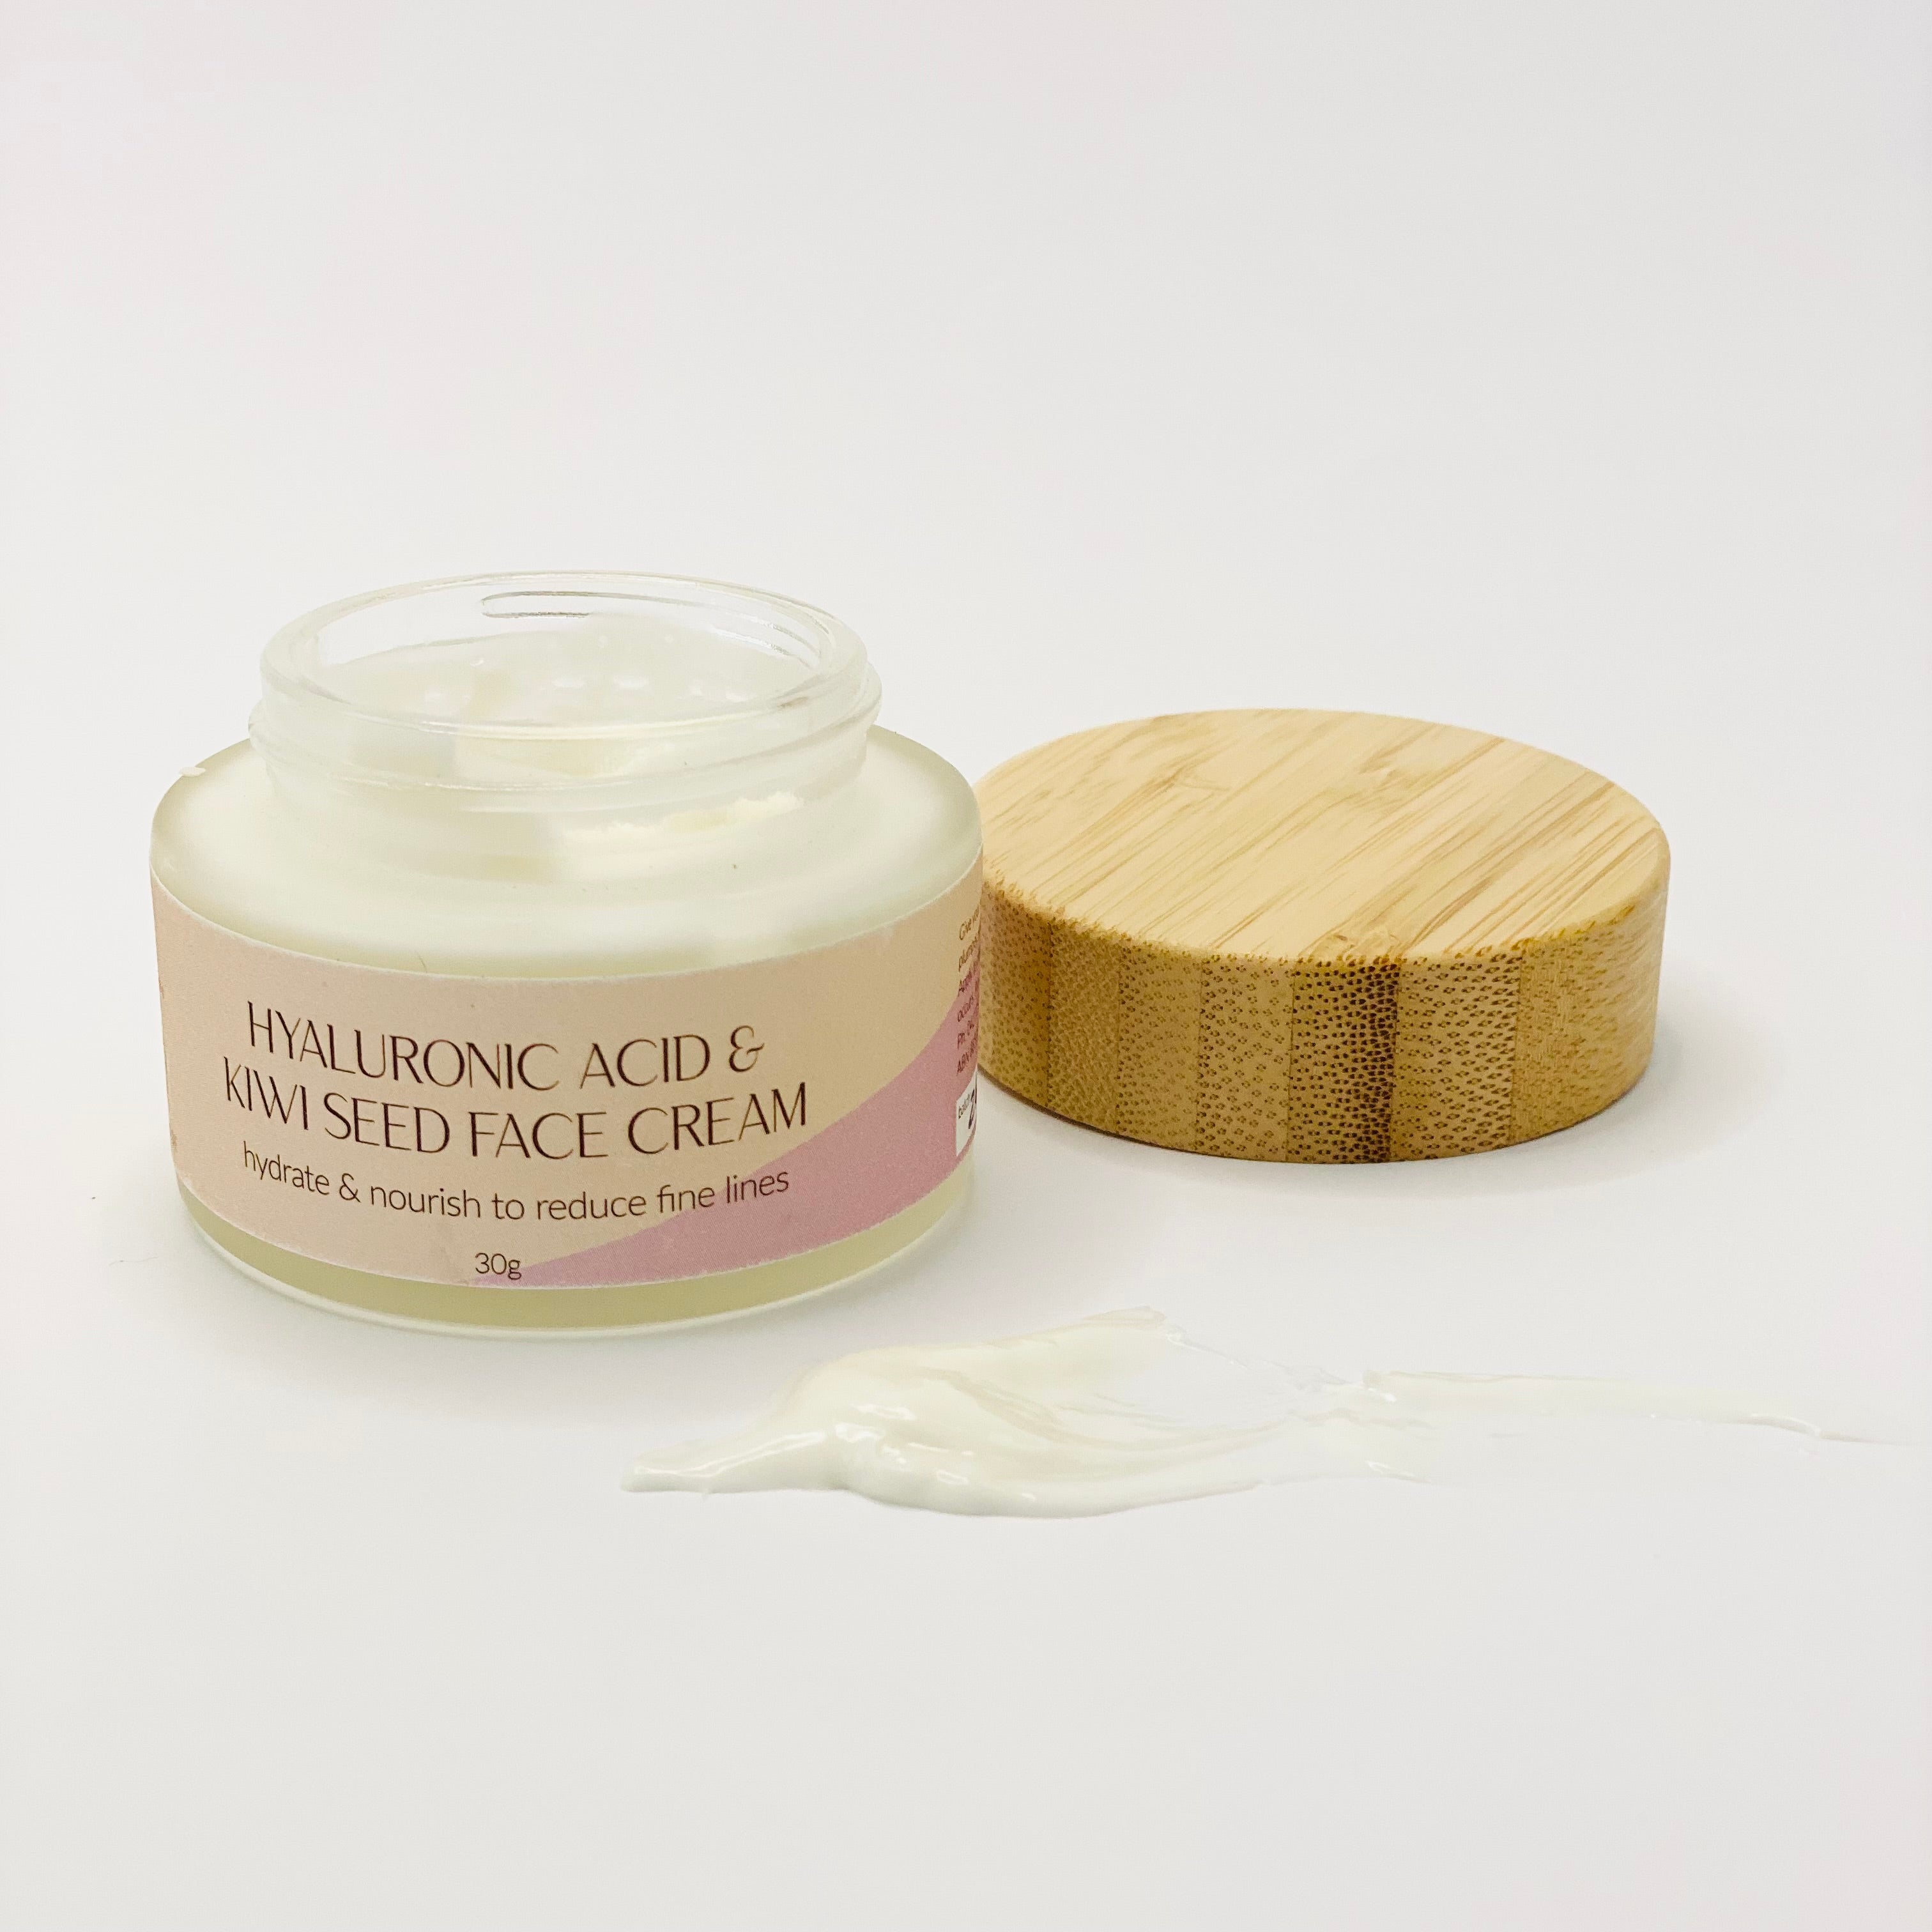 Hyaluronic Acid &amp; Kiwi Seed Face Cream